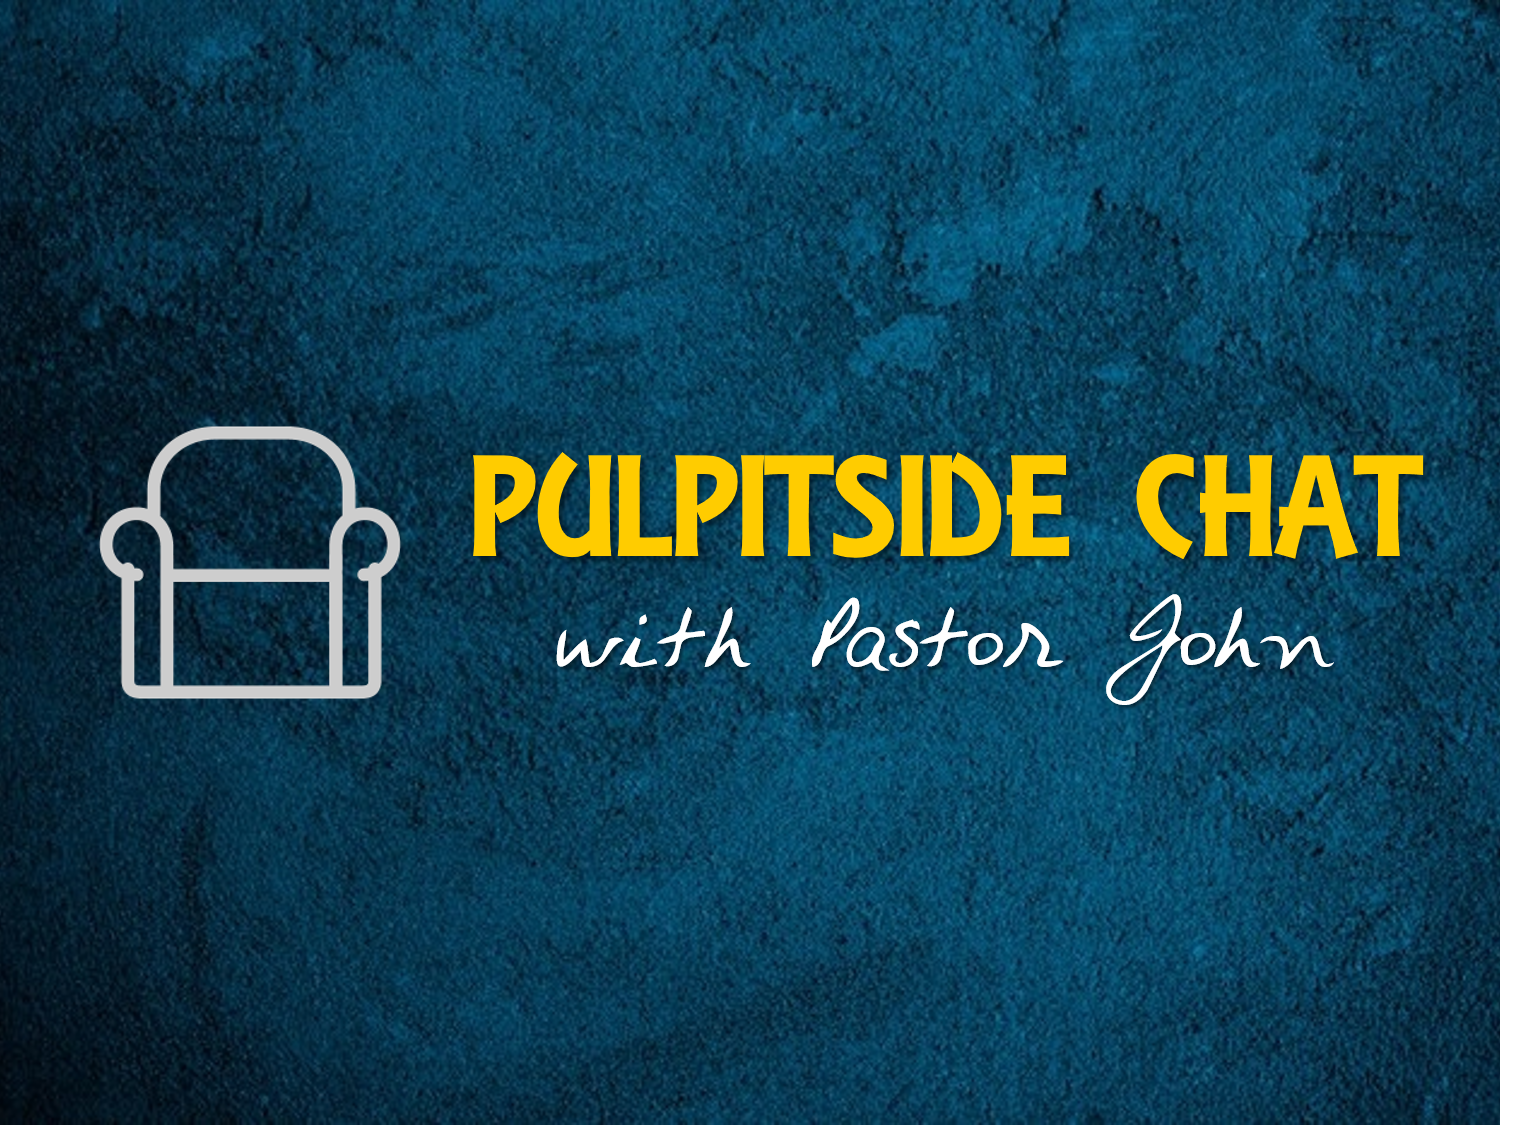 Pulpit-Side Chat